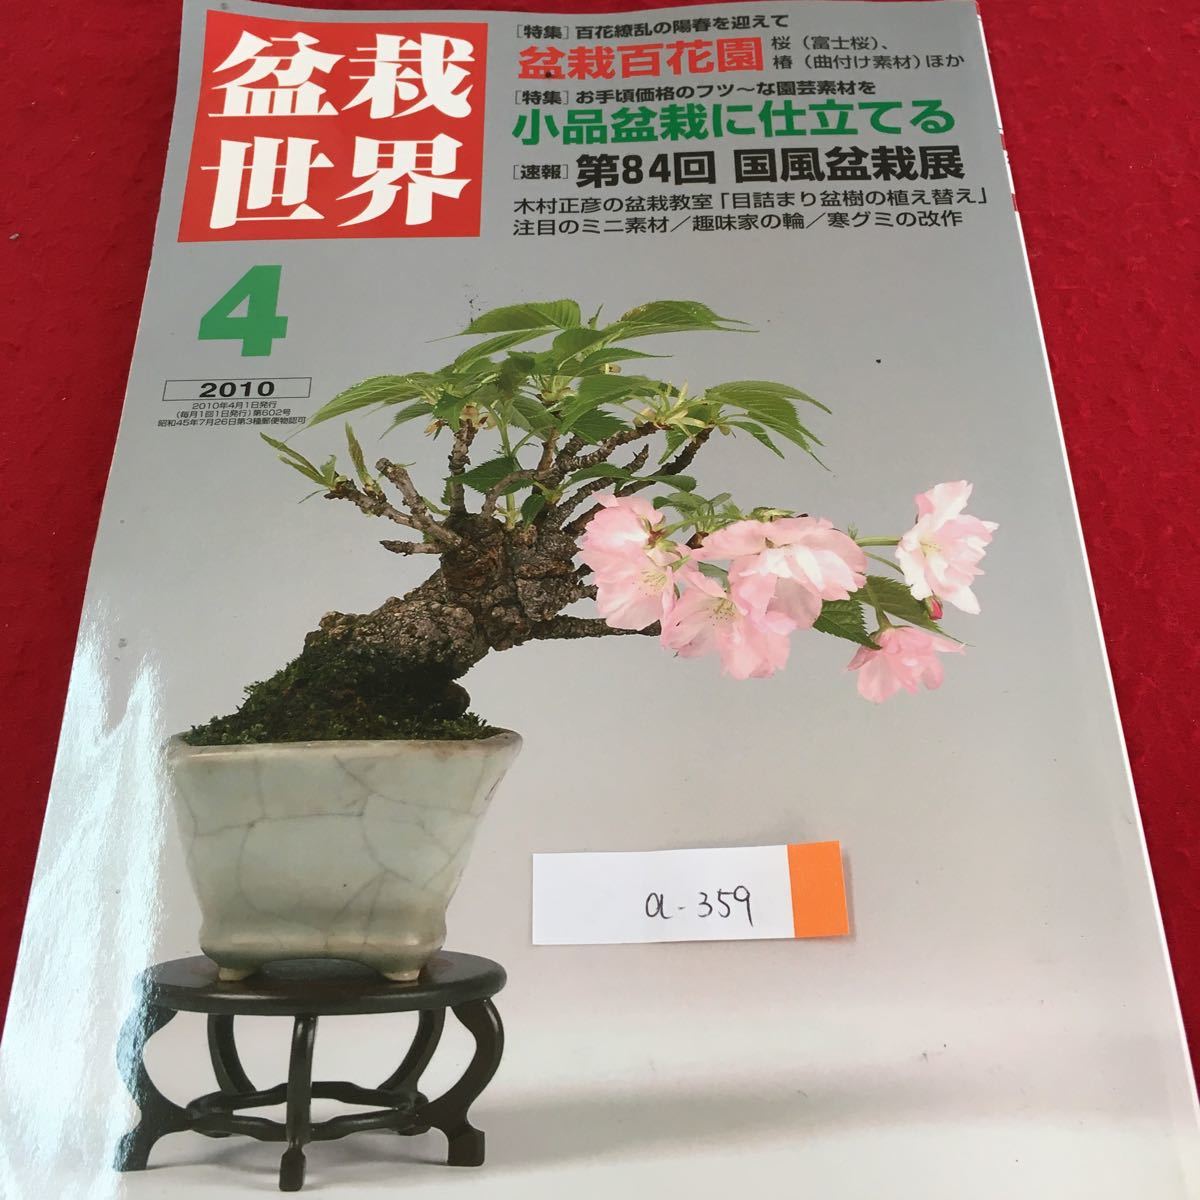 a-359 bonsai world 4 bonsai 100 flower . shohin bonsai . tailoring . no. 84 times country manner . bonsai exhibition attention. Mini material 2010 year 4 month 1 day issue *3